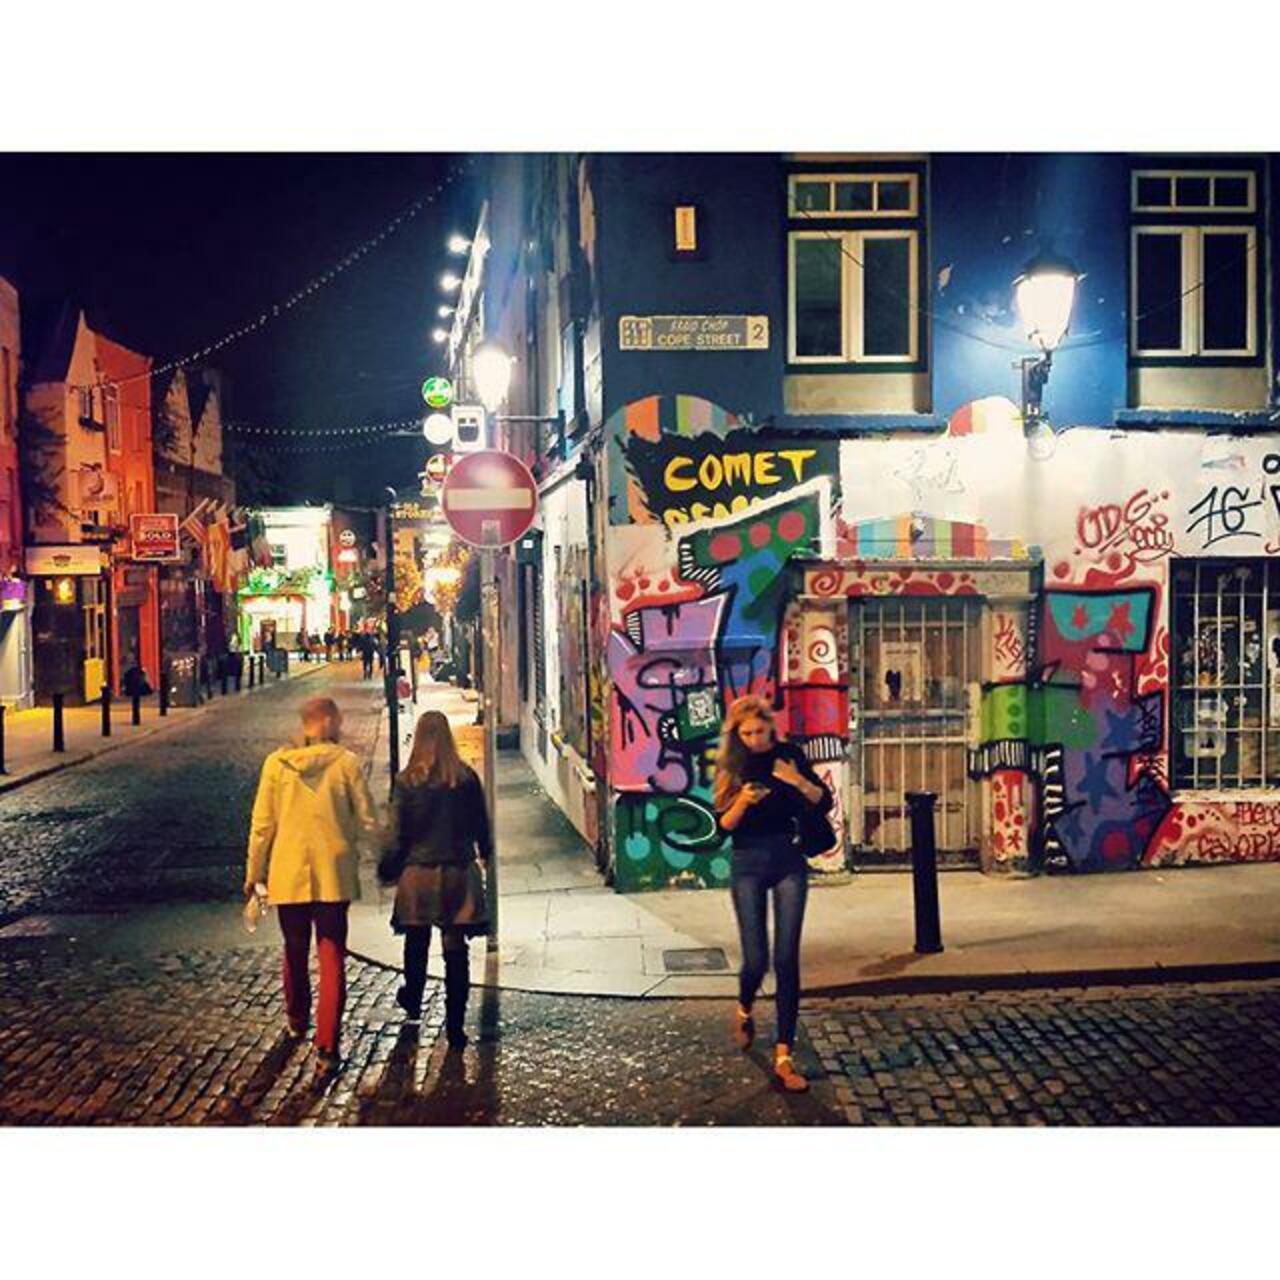 FW: #Dublin #Love #Ireland #City #Night #TempleBar #StreetLife #StreetArt #Graffiti #Mural #IgersDublin #LoveDublin… http://t.co/3Ls2bUZ7v9